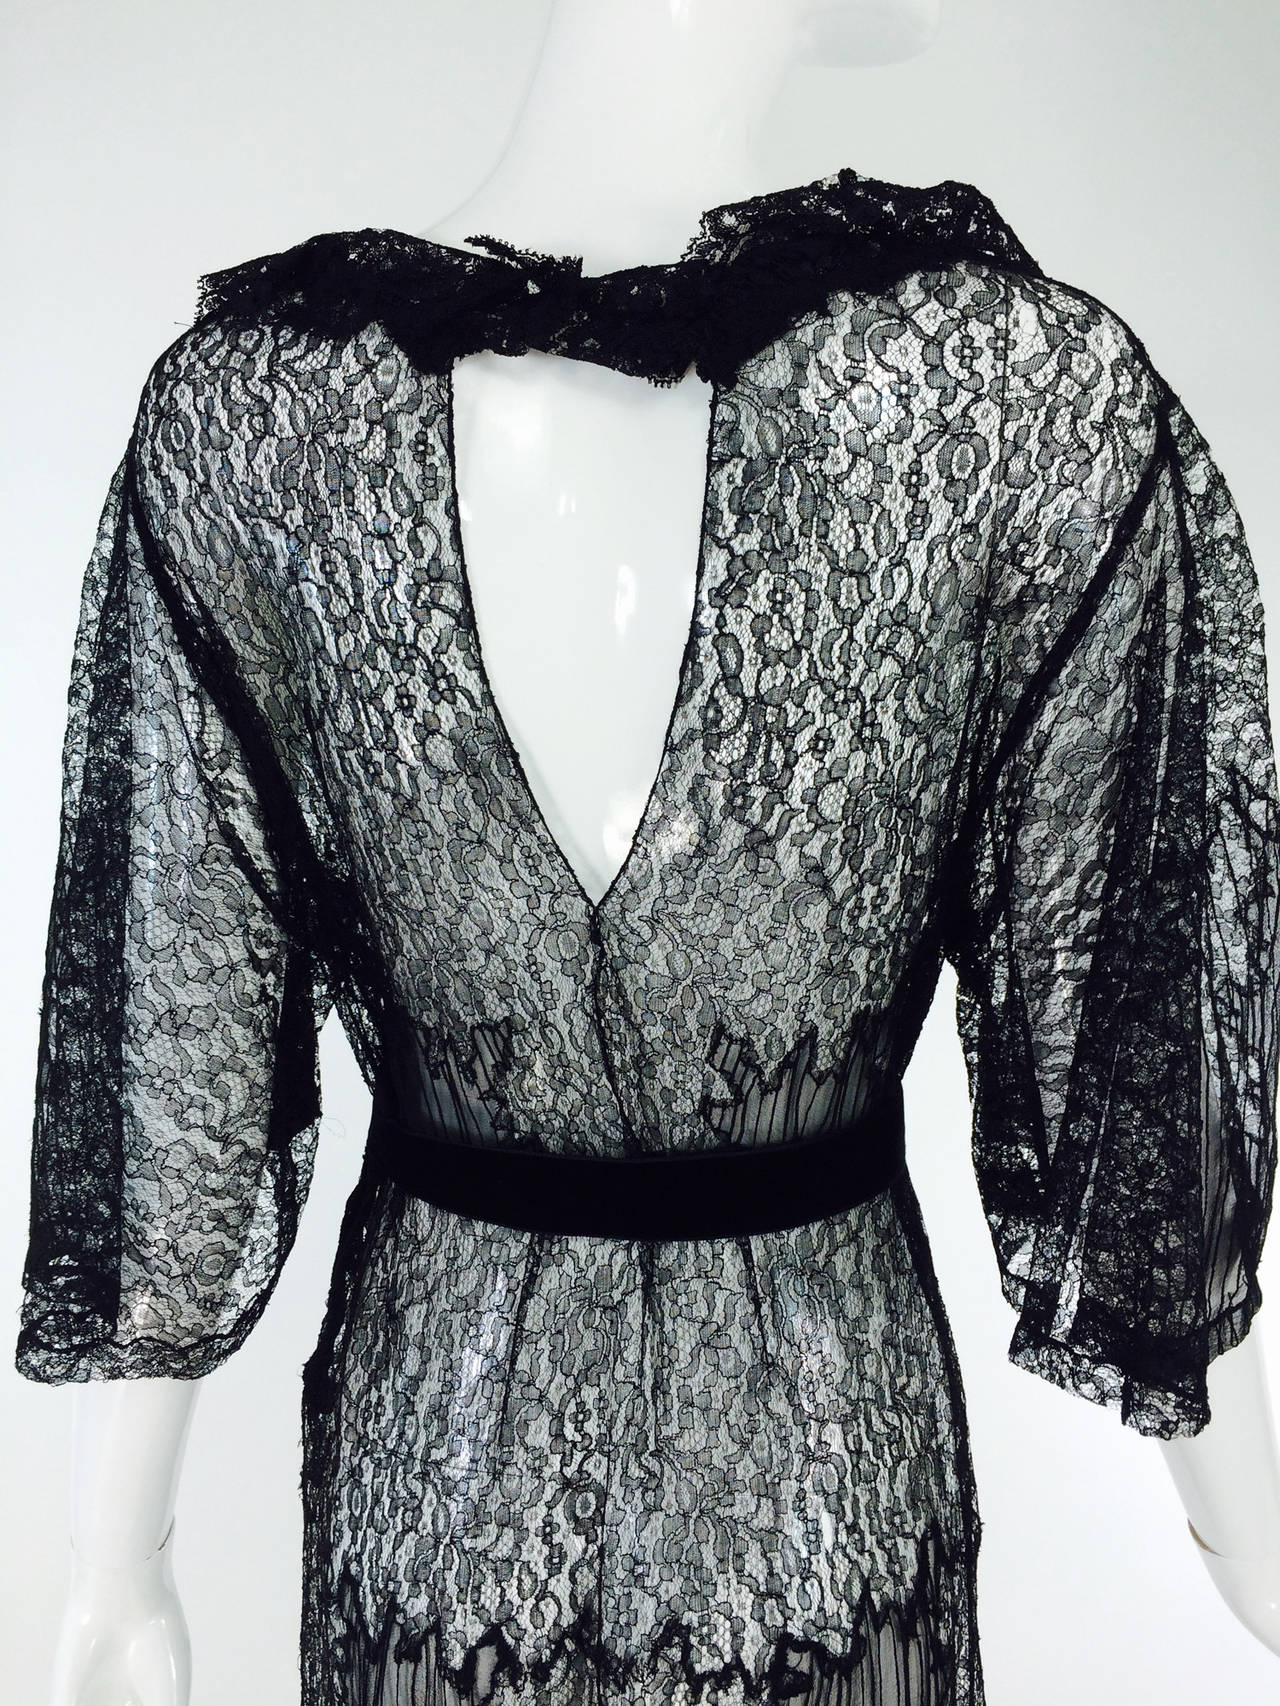 Black lace & chiffon dress from the 1940s 2